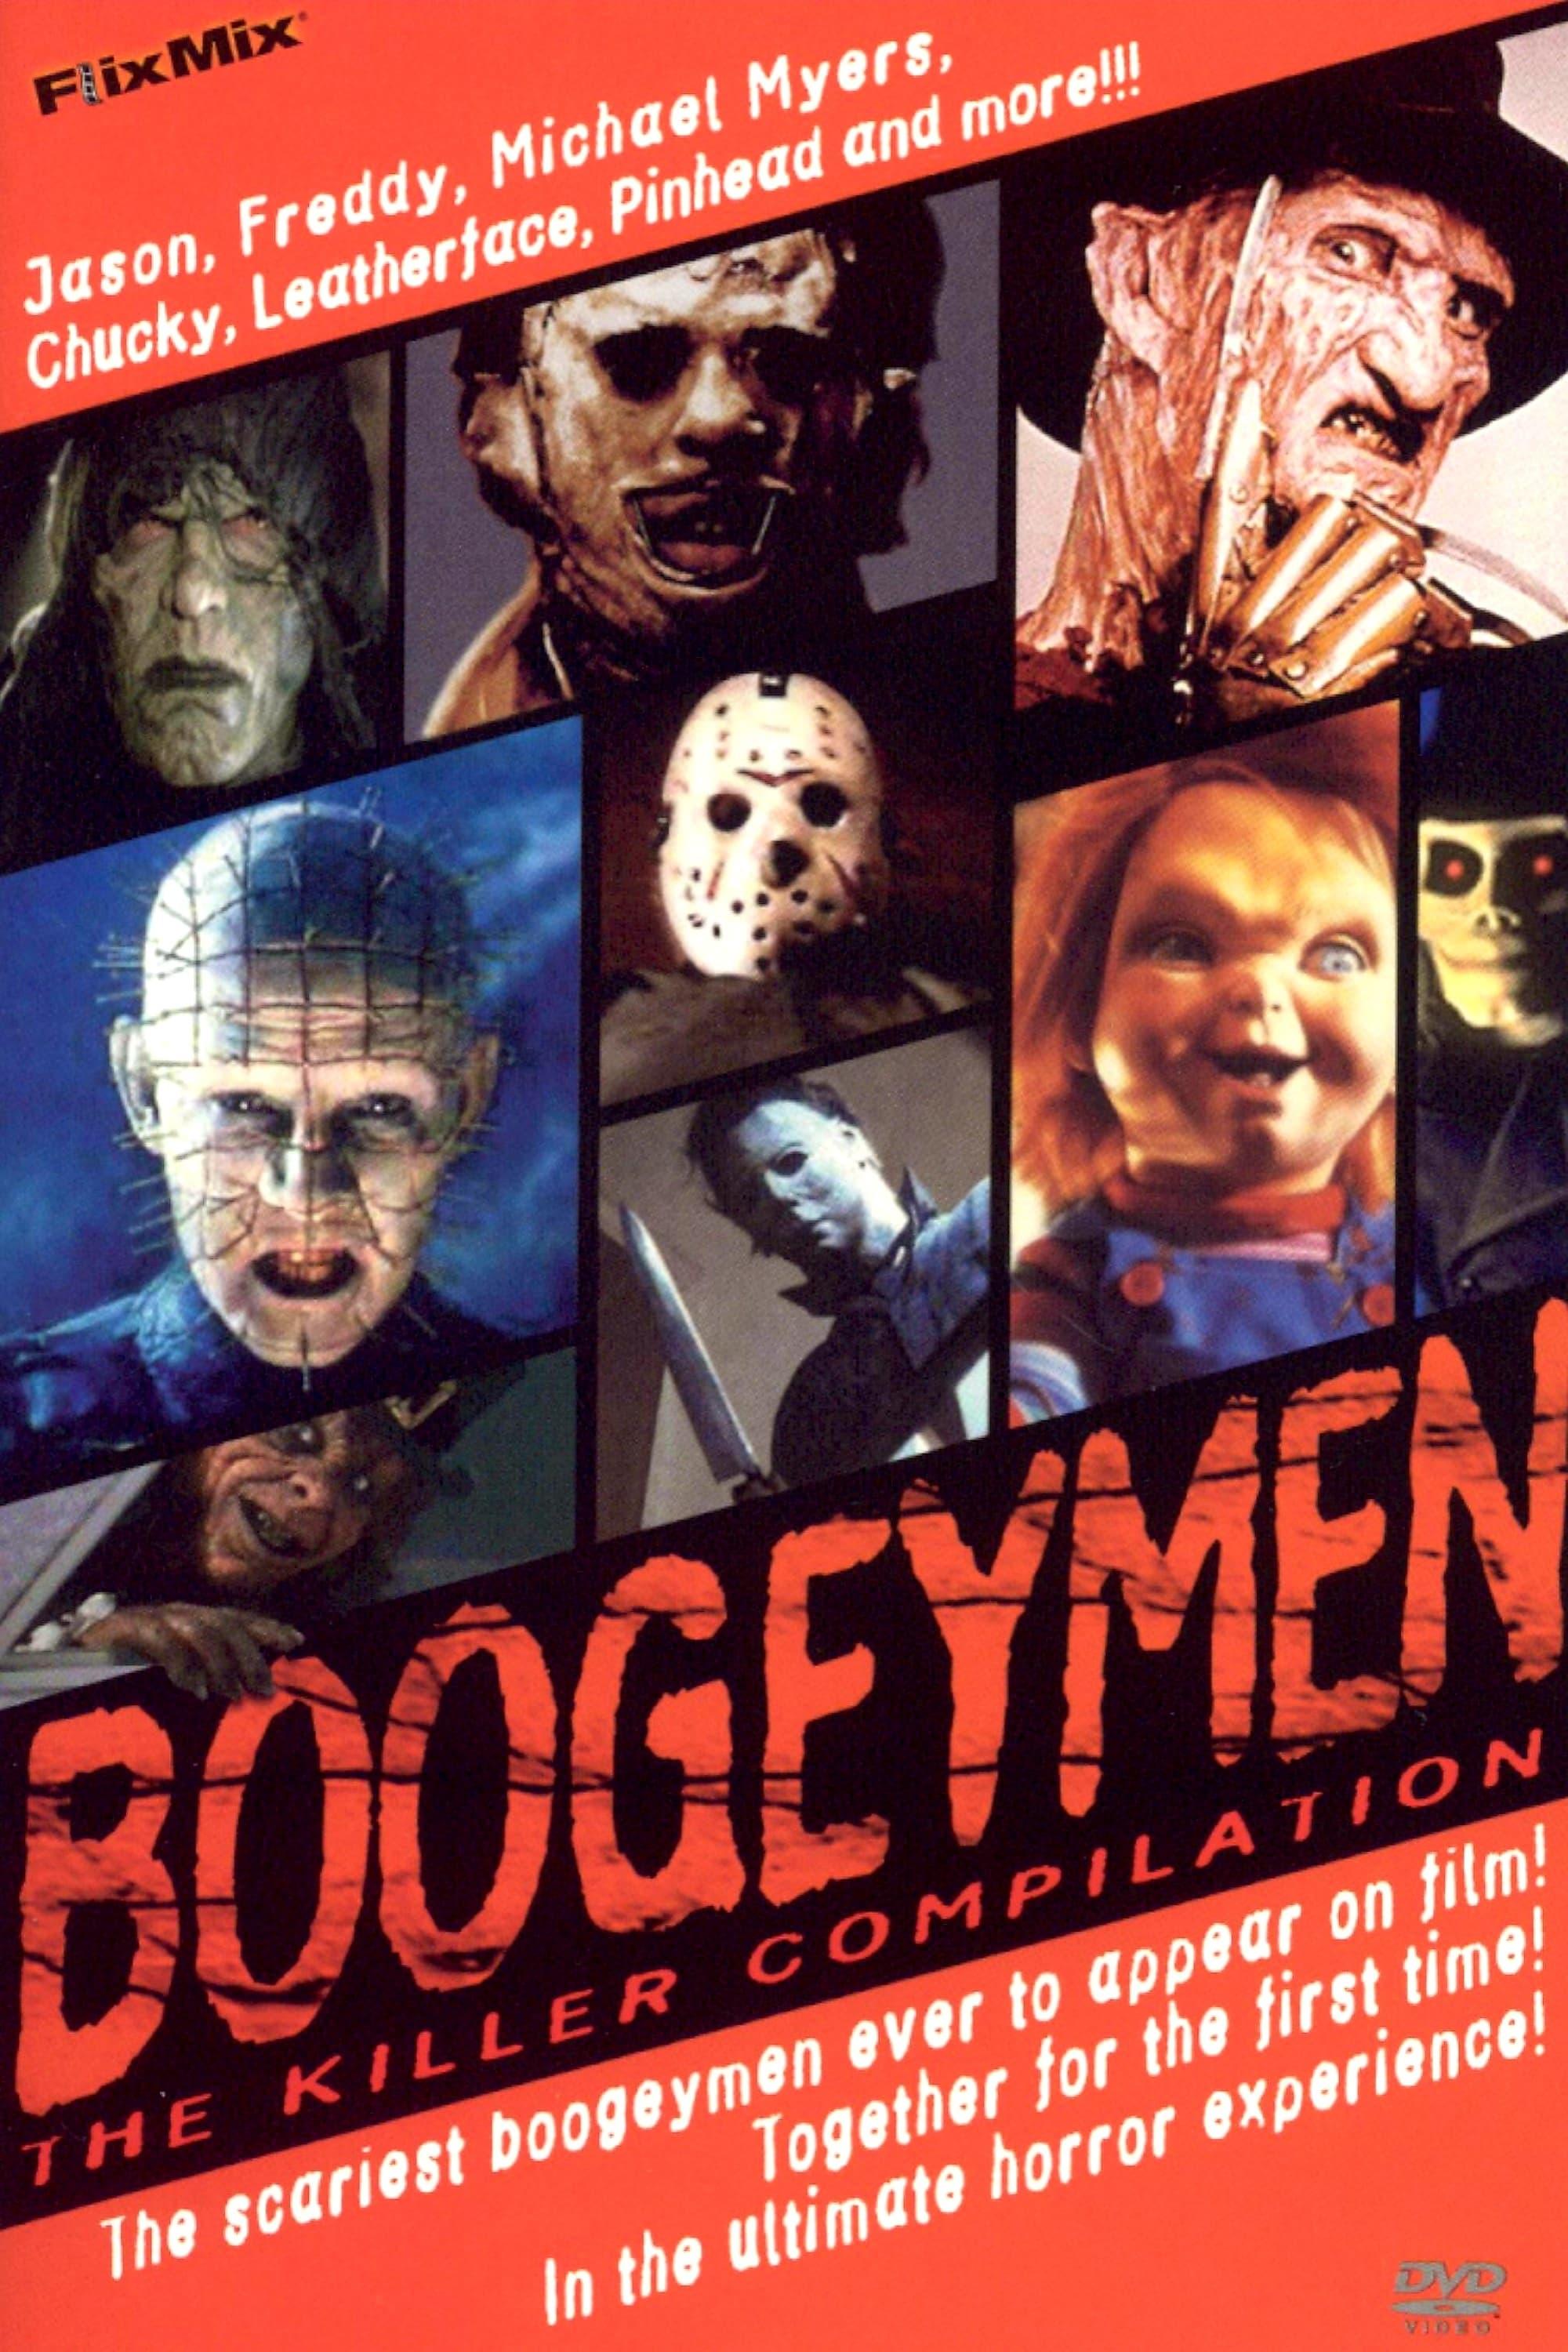 Boogeymen: The Killer Compilation poster